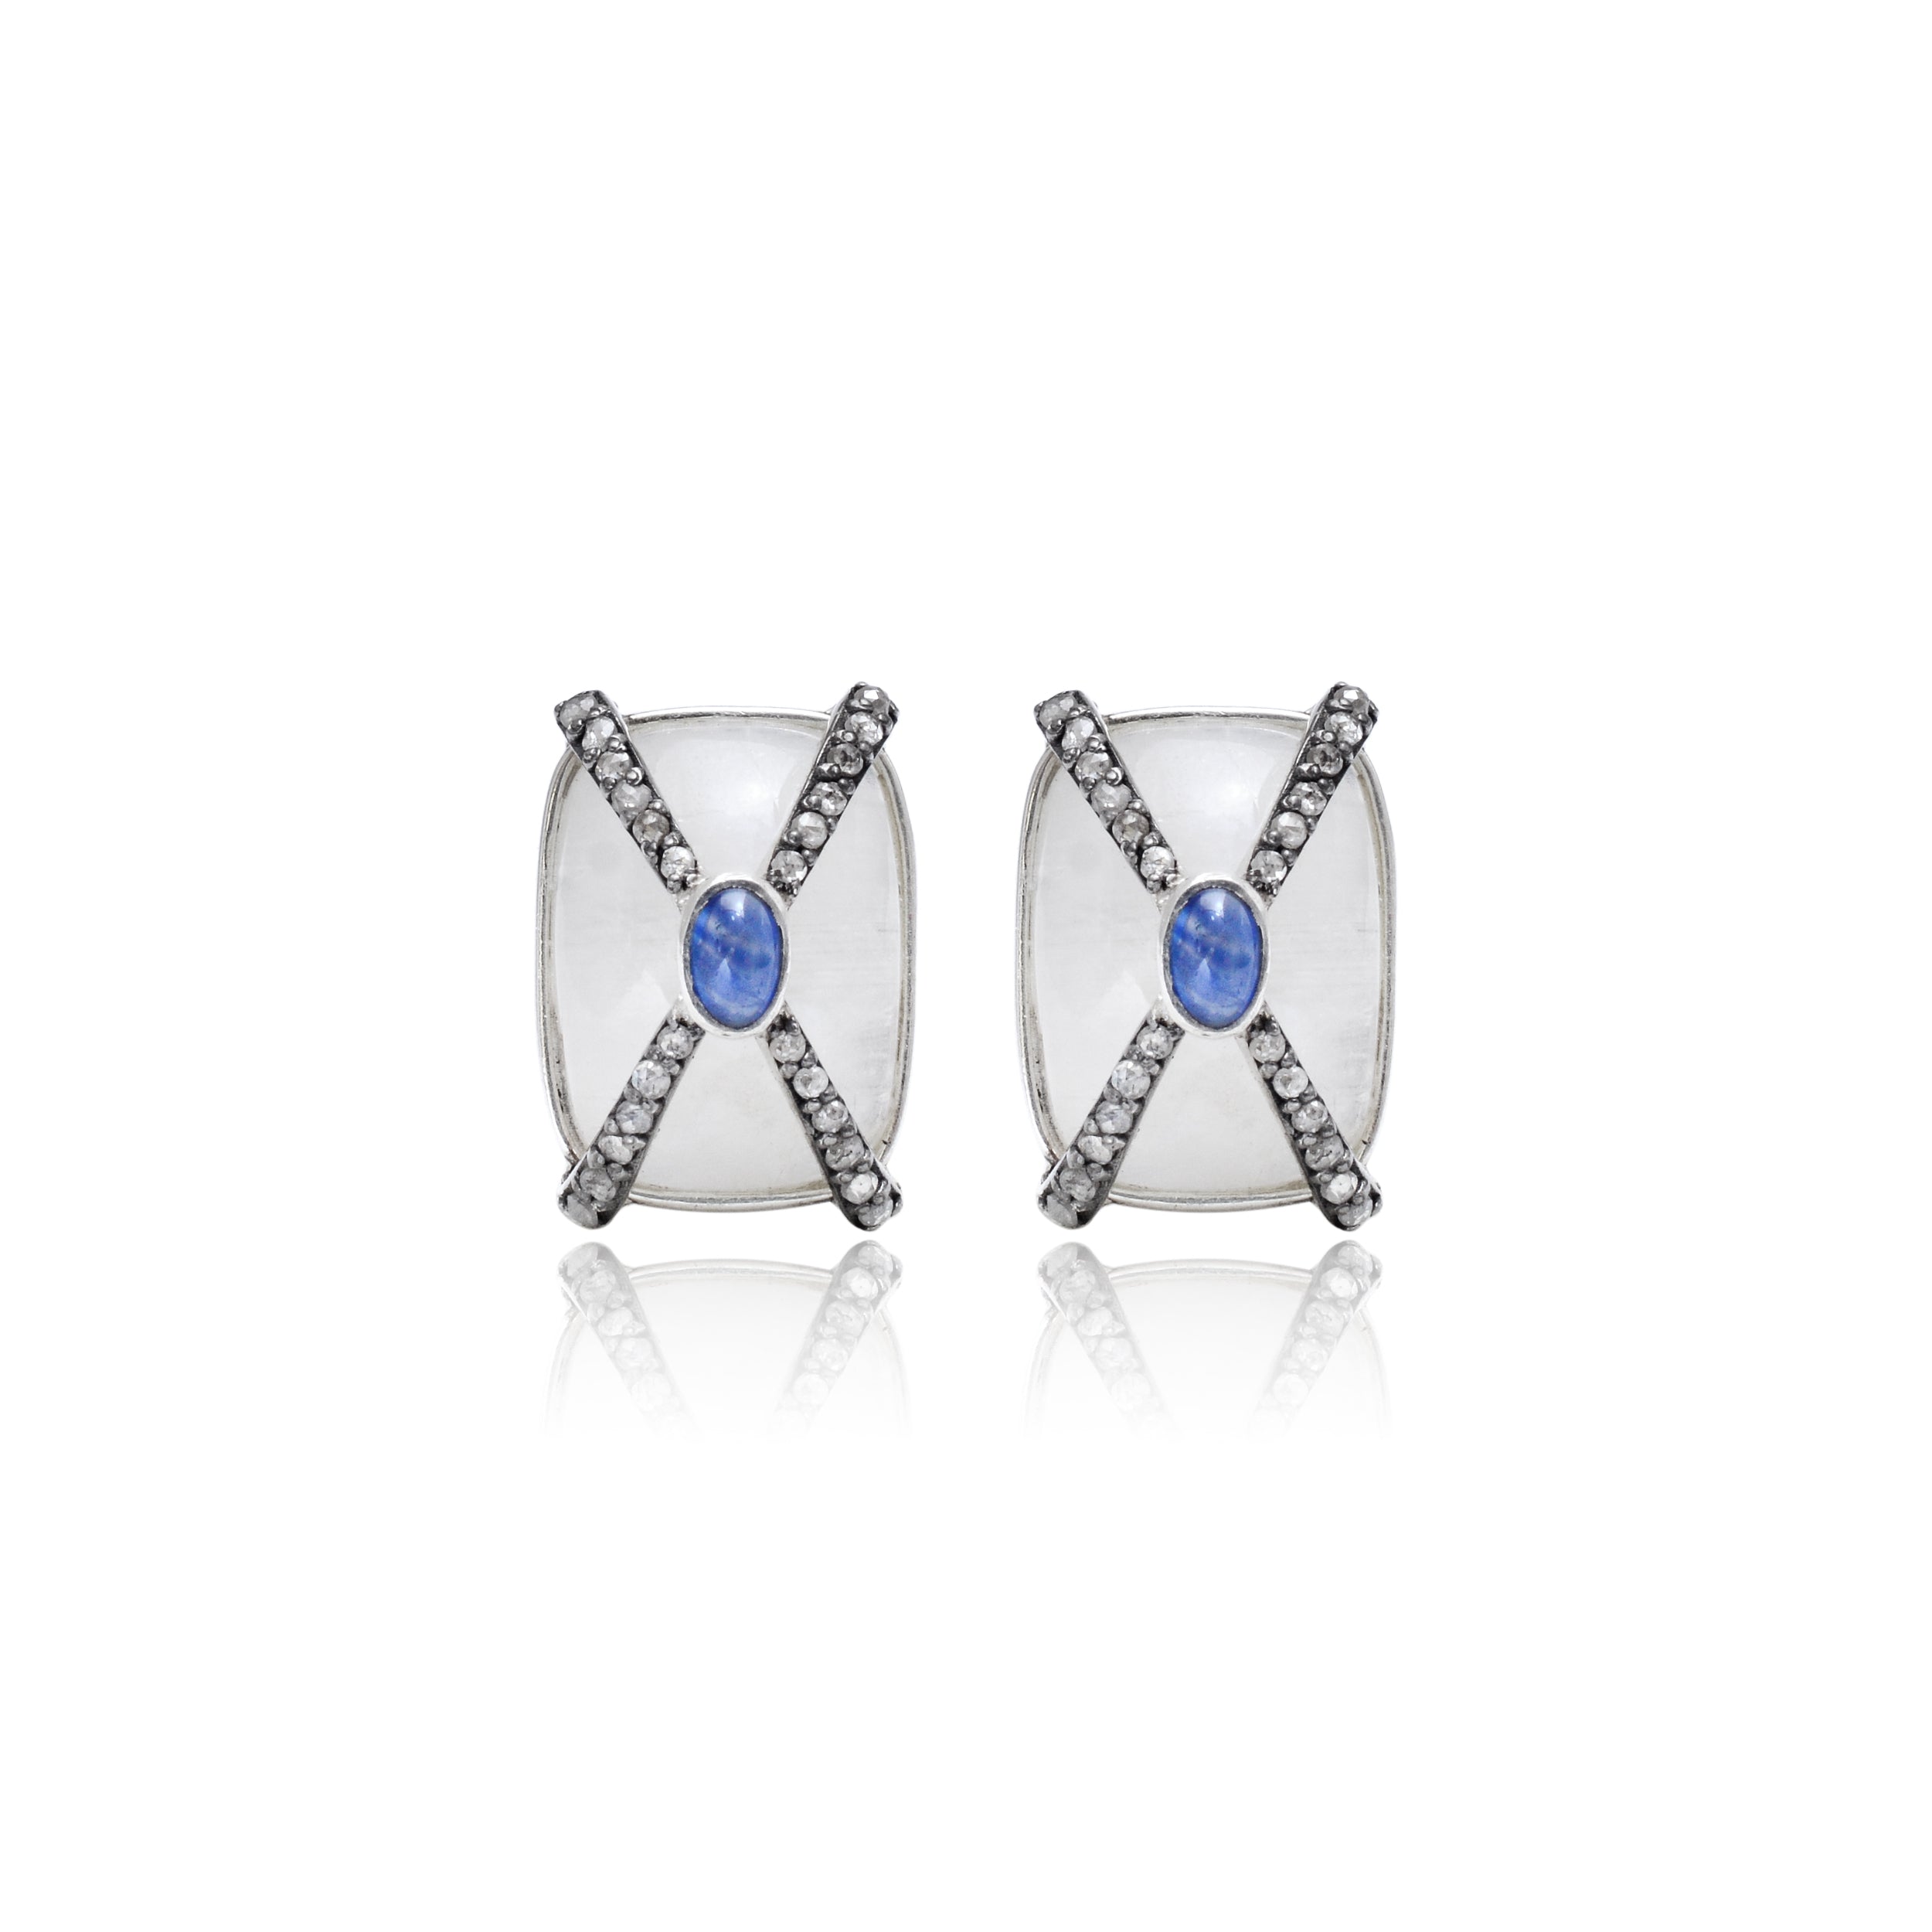 925 Silver Diamond Cufflinks with gemstones